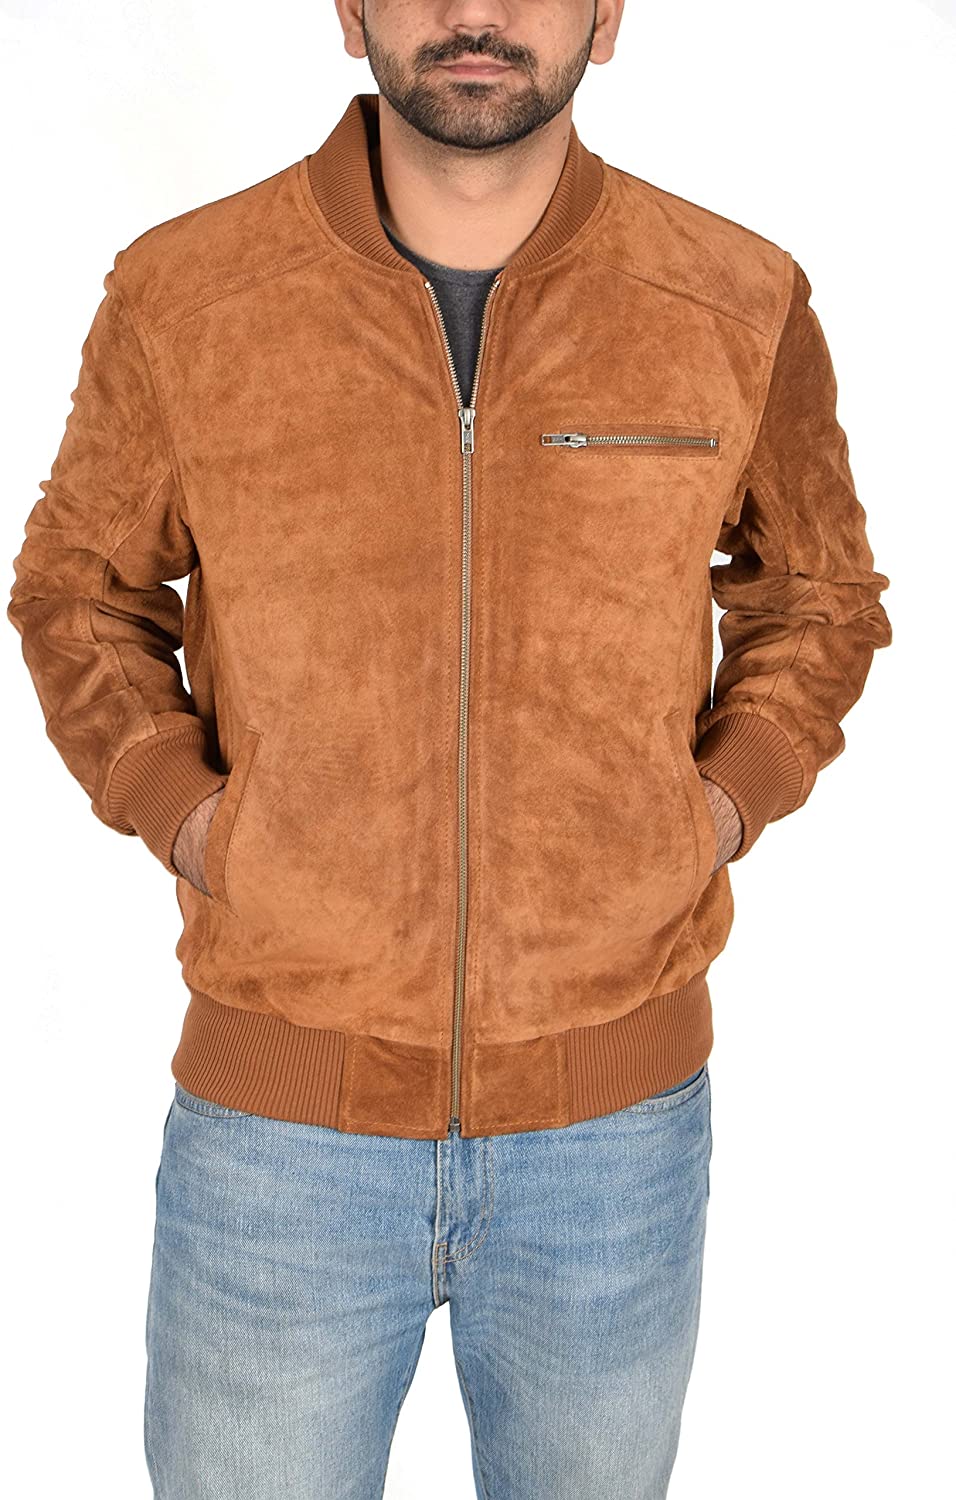 Men's Suede Bomber Jacket Classic Retro Varsity Tan Real Leather Jacket